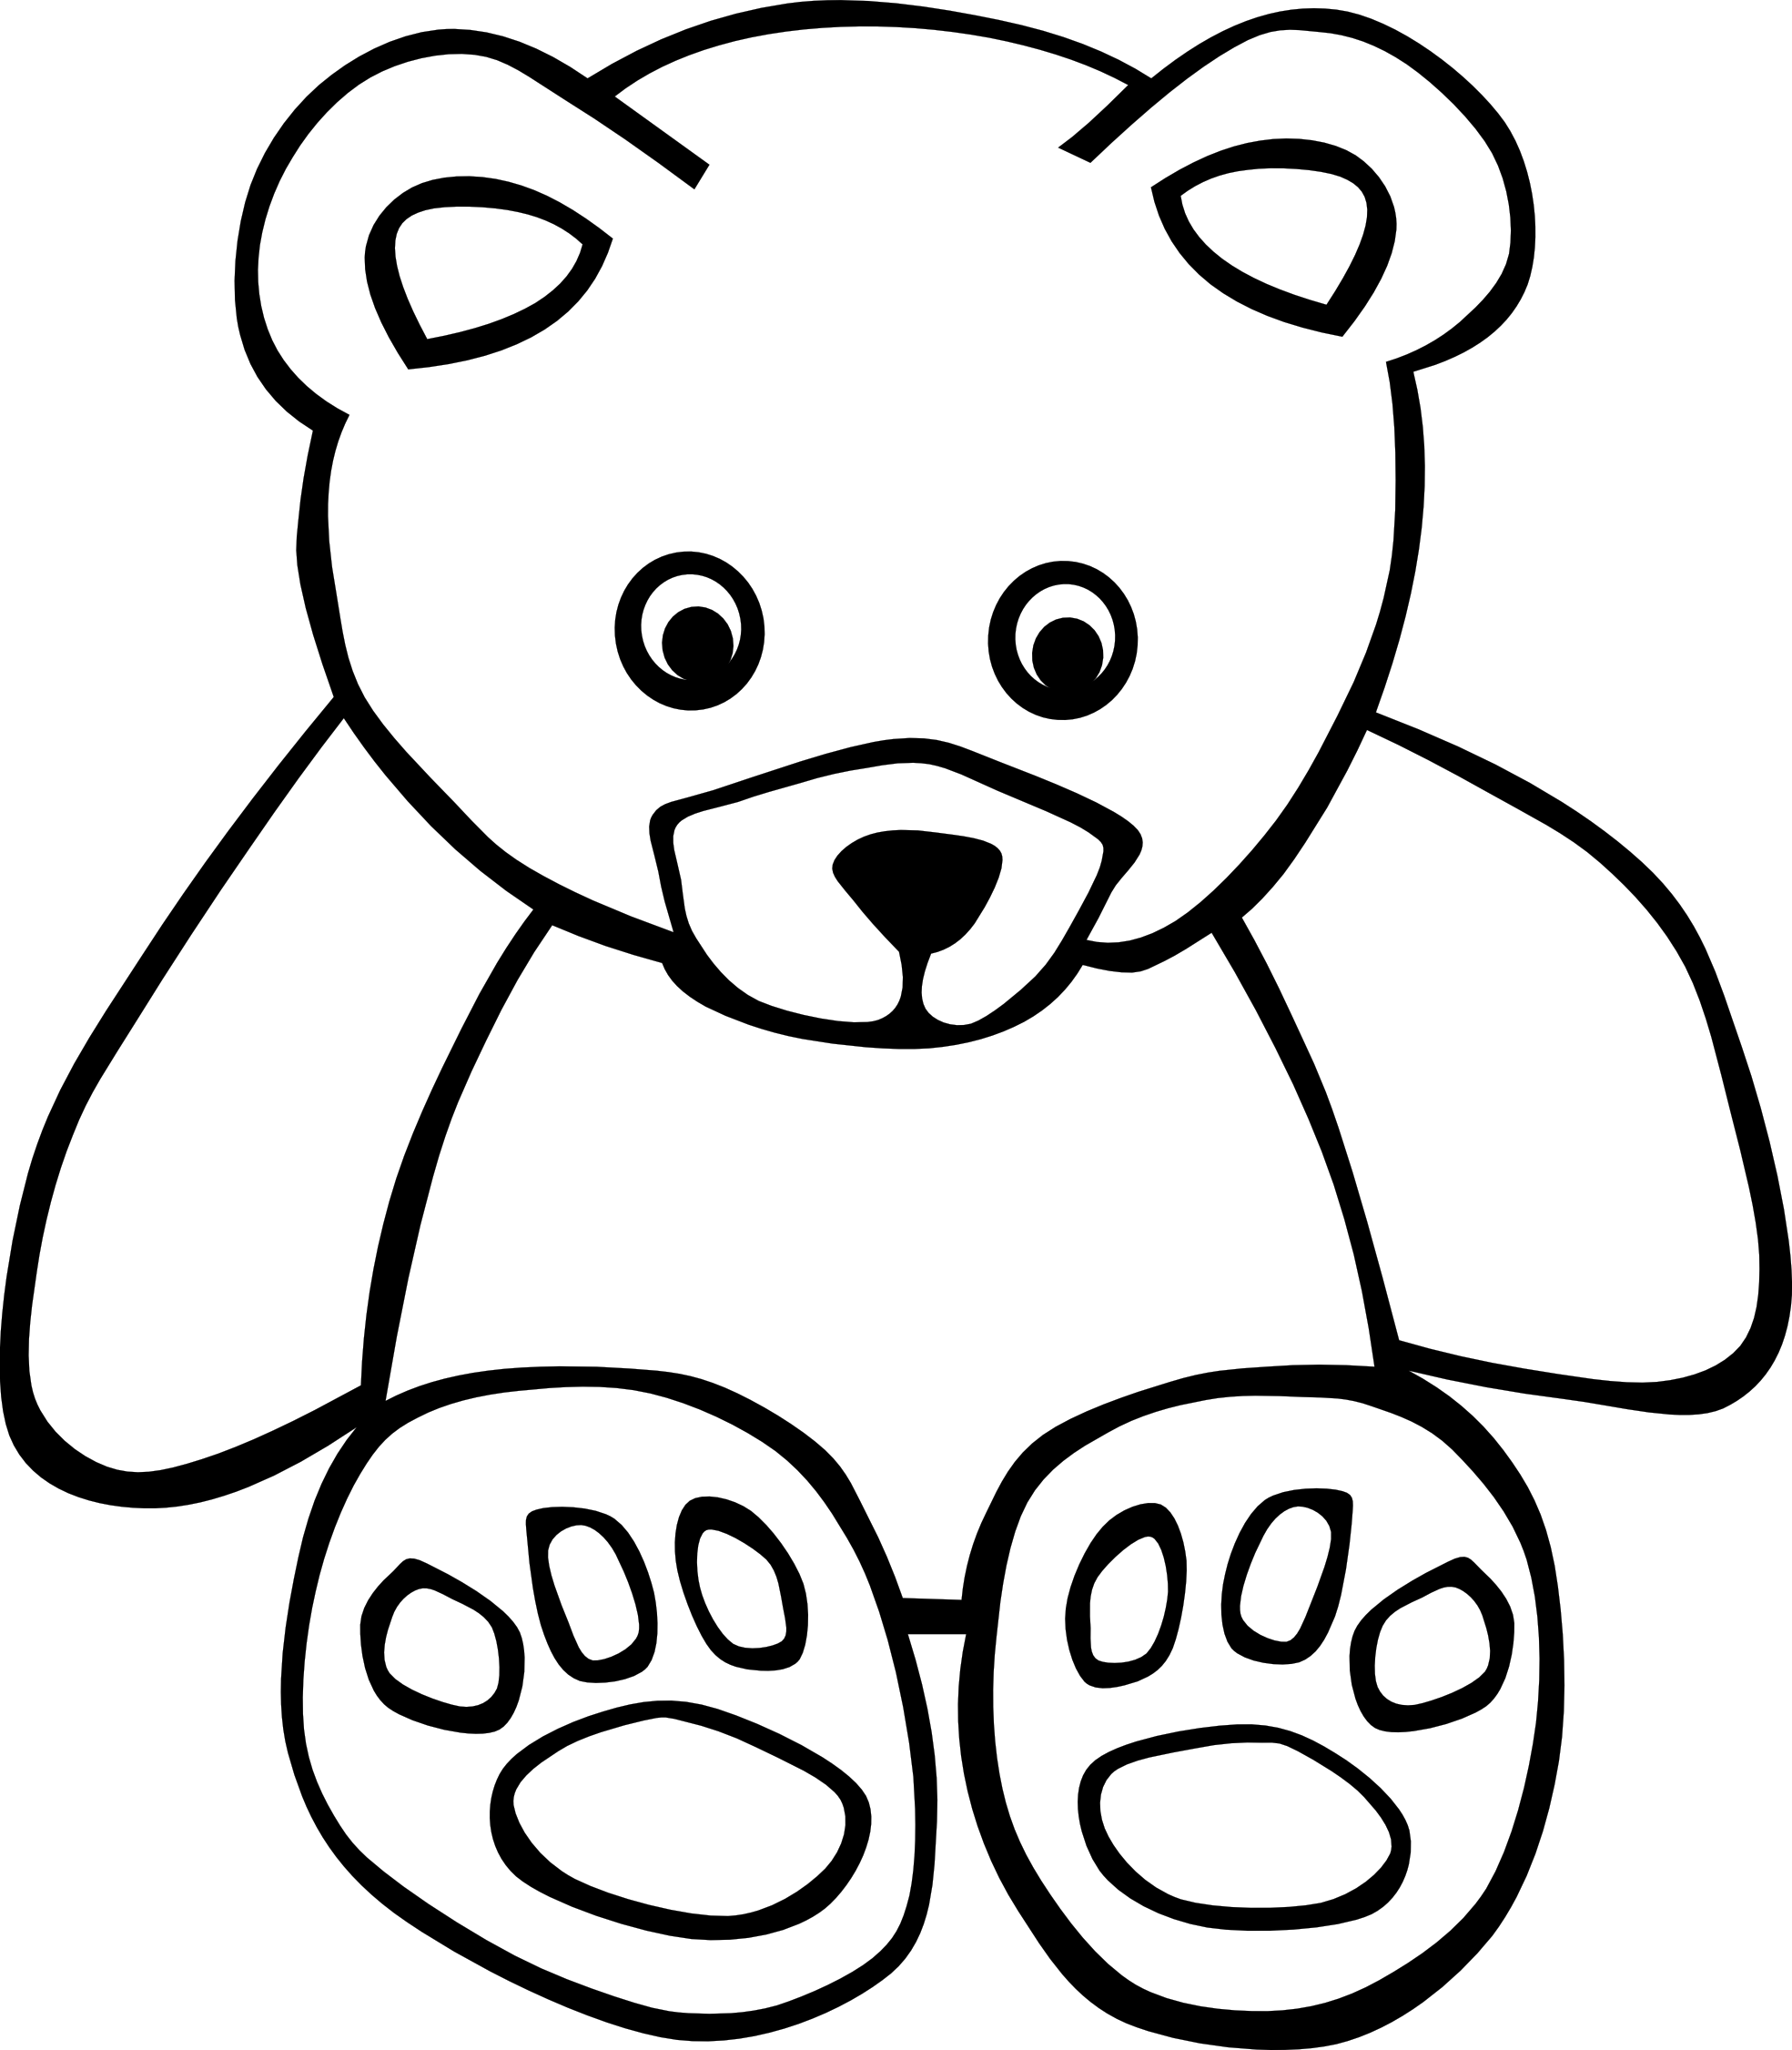 How to Draw Teddy bear - YouTube